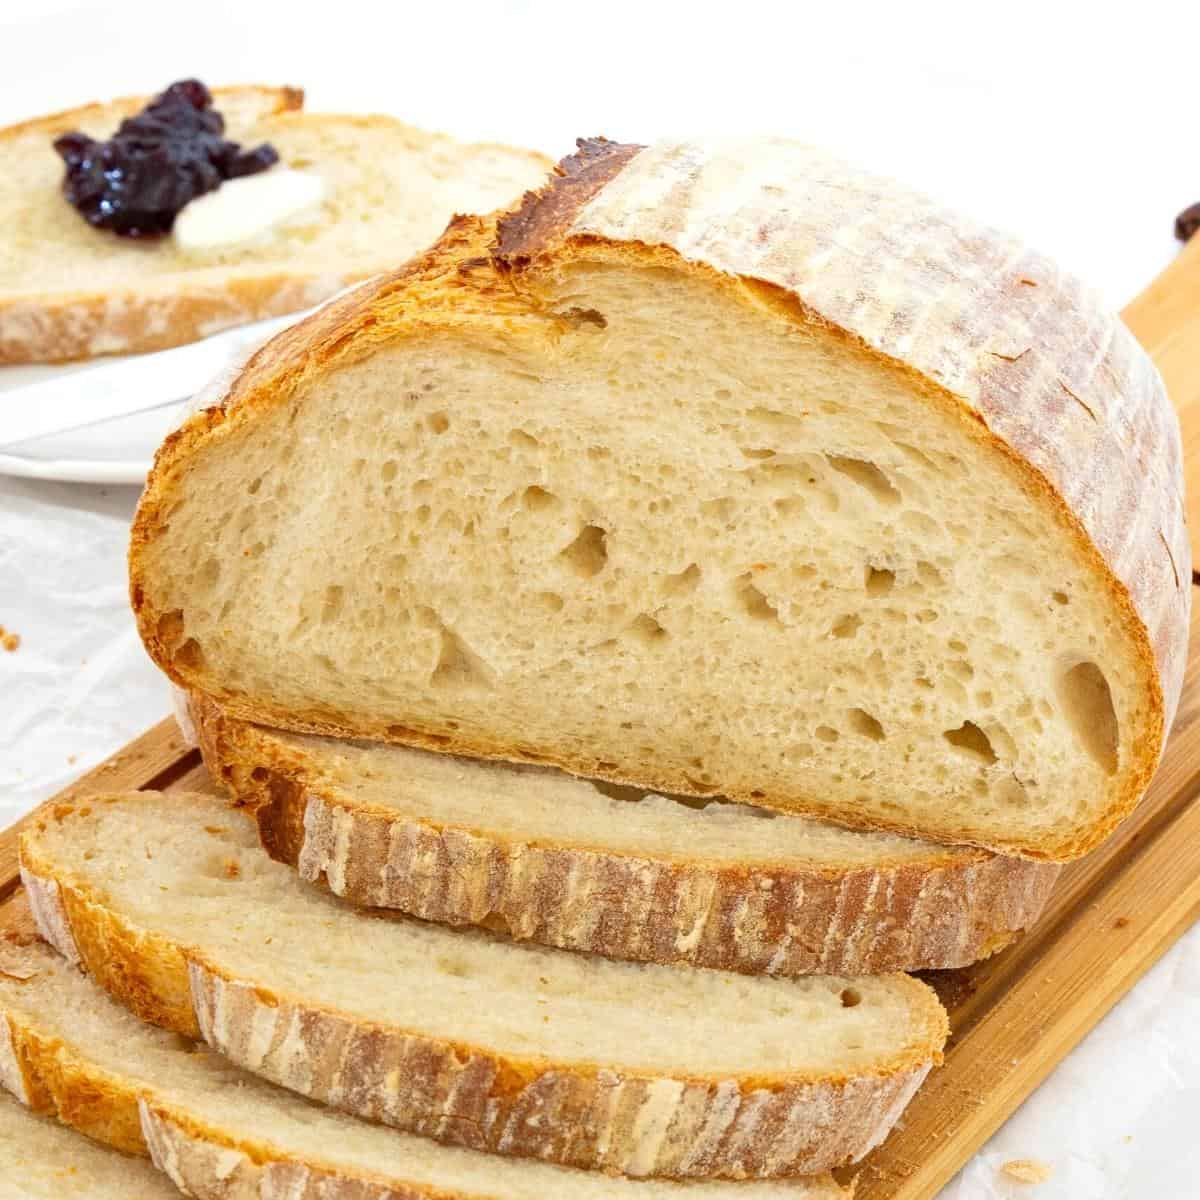 Sourdough bread with all-purpose flour